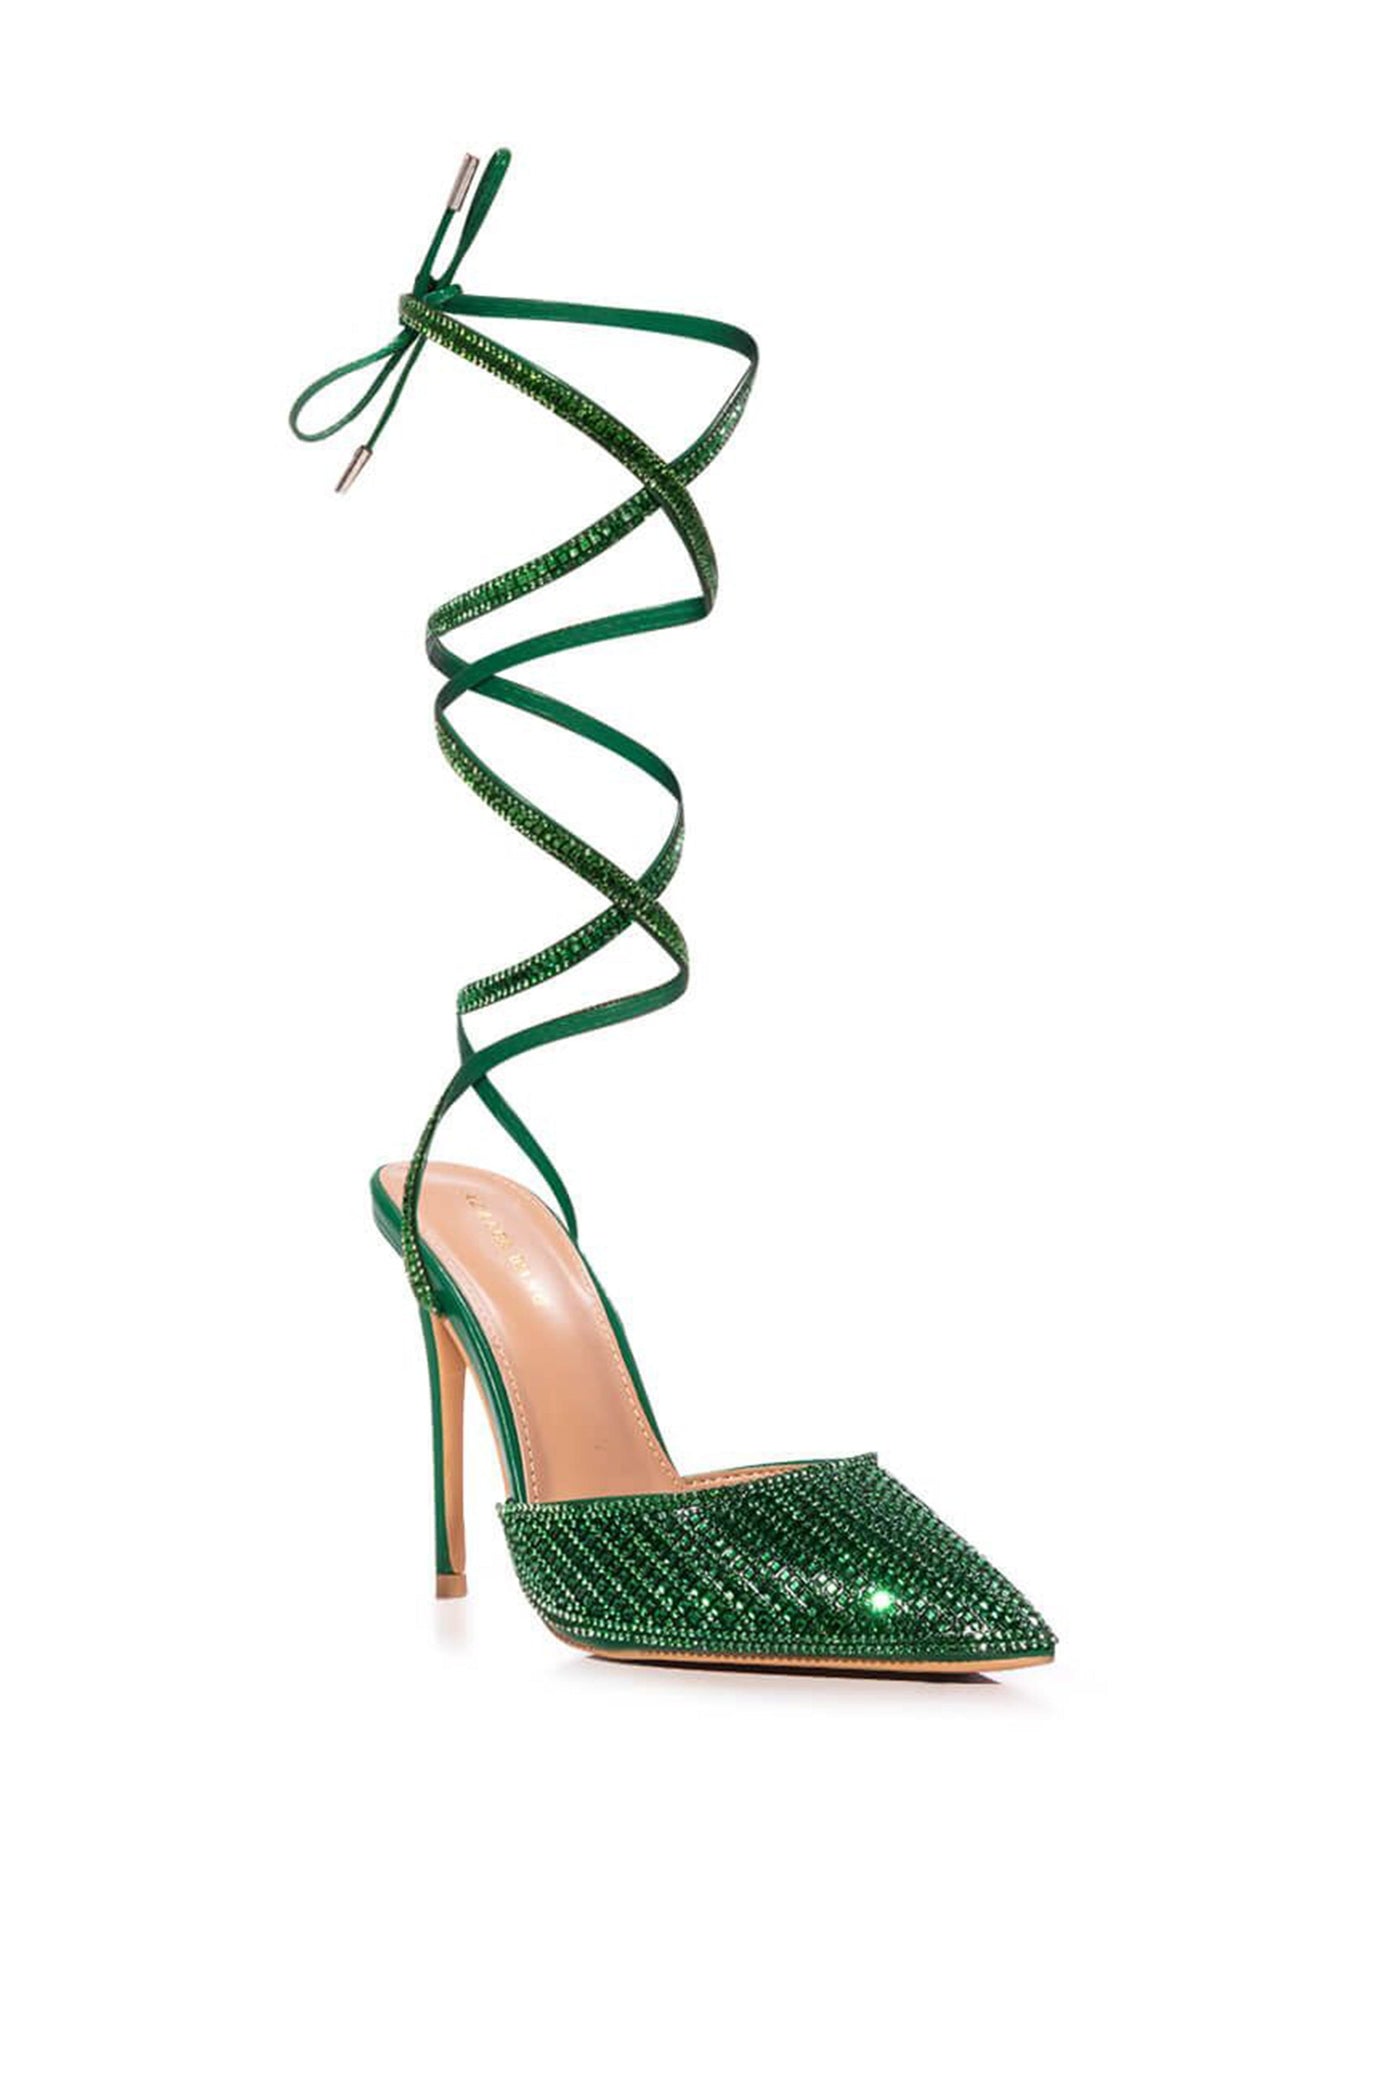 Azalea Wang Riss Emerald Green Lace Up Heel